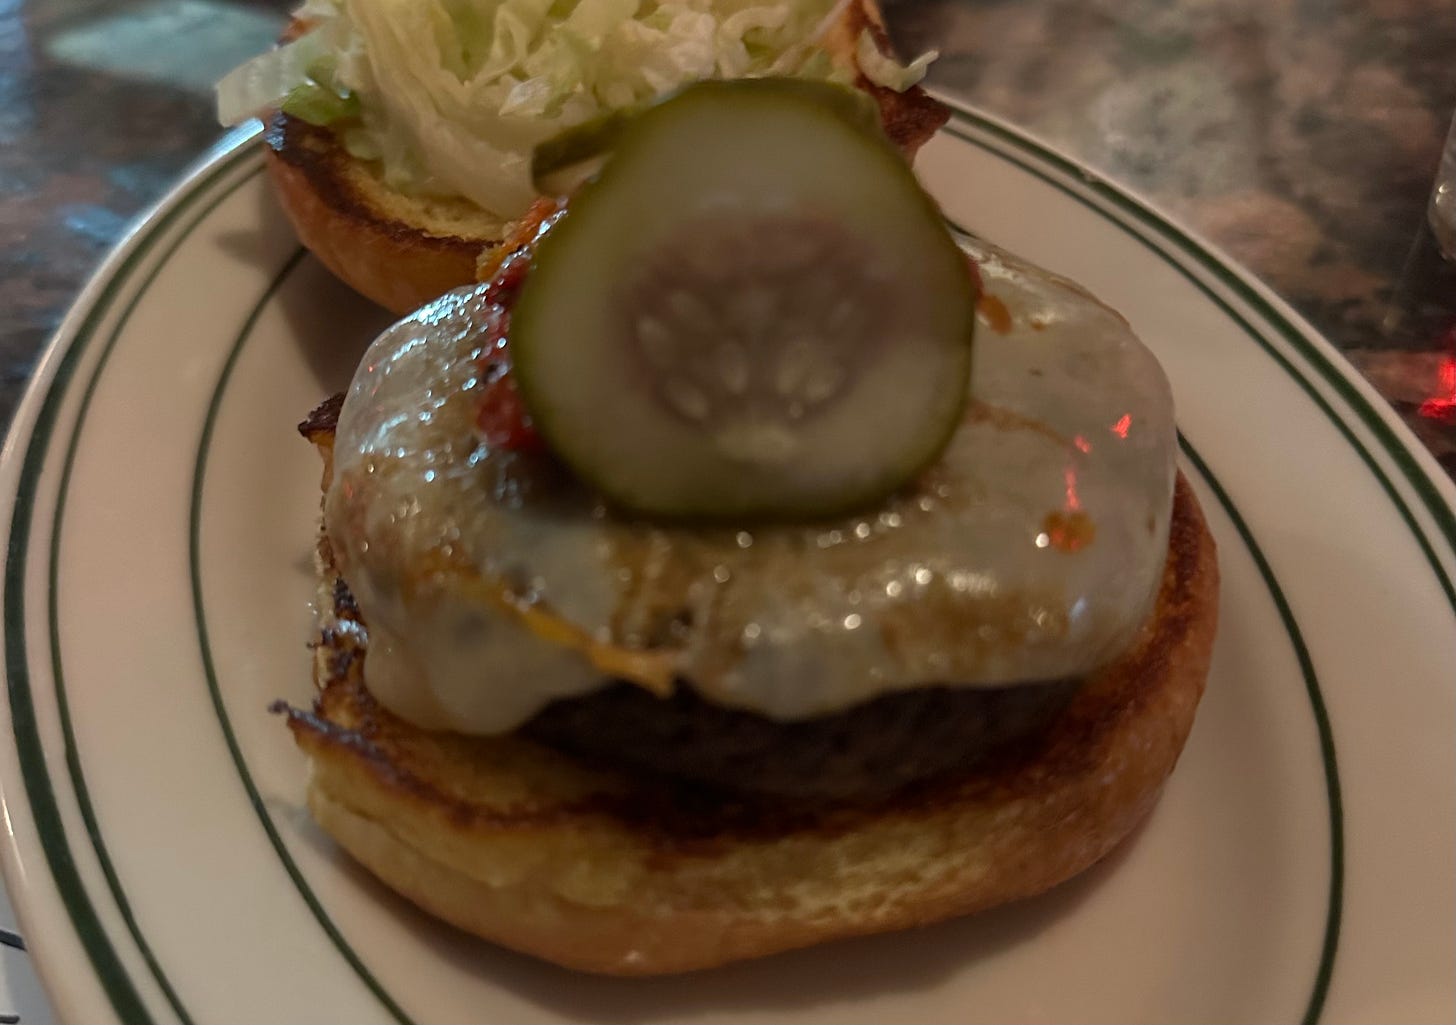 The titular burger from Superiority Burger.